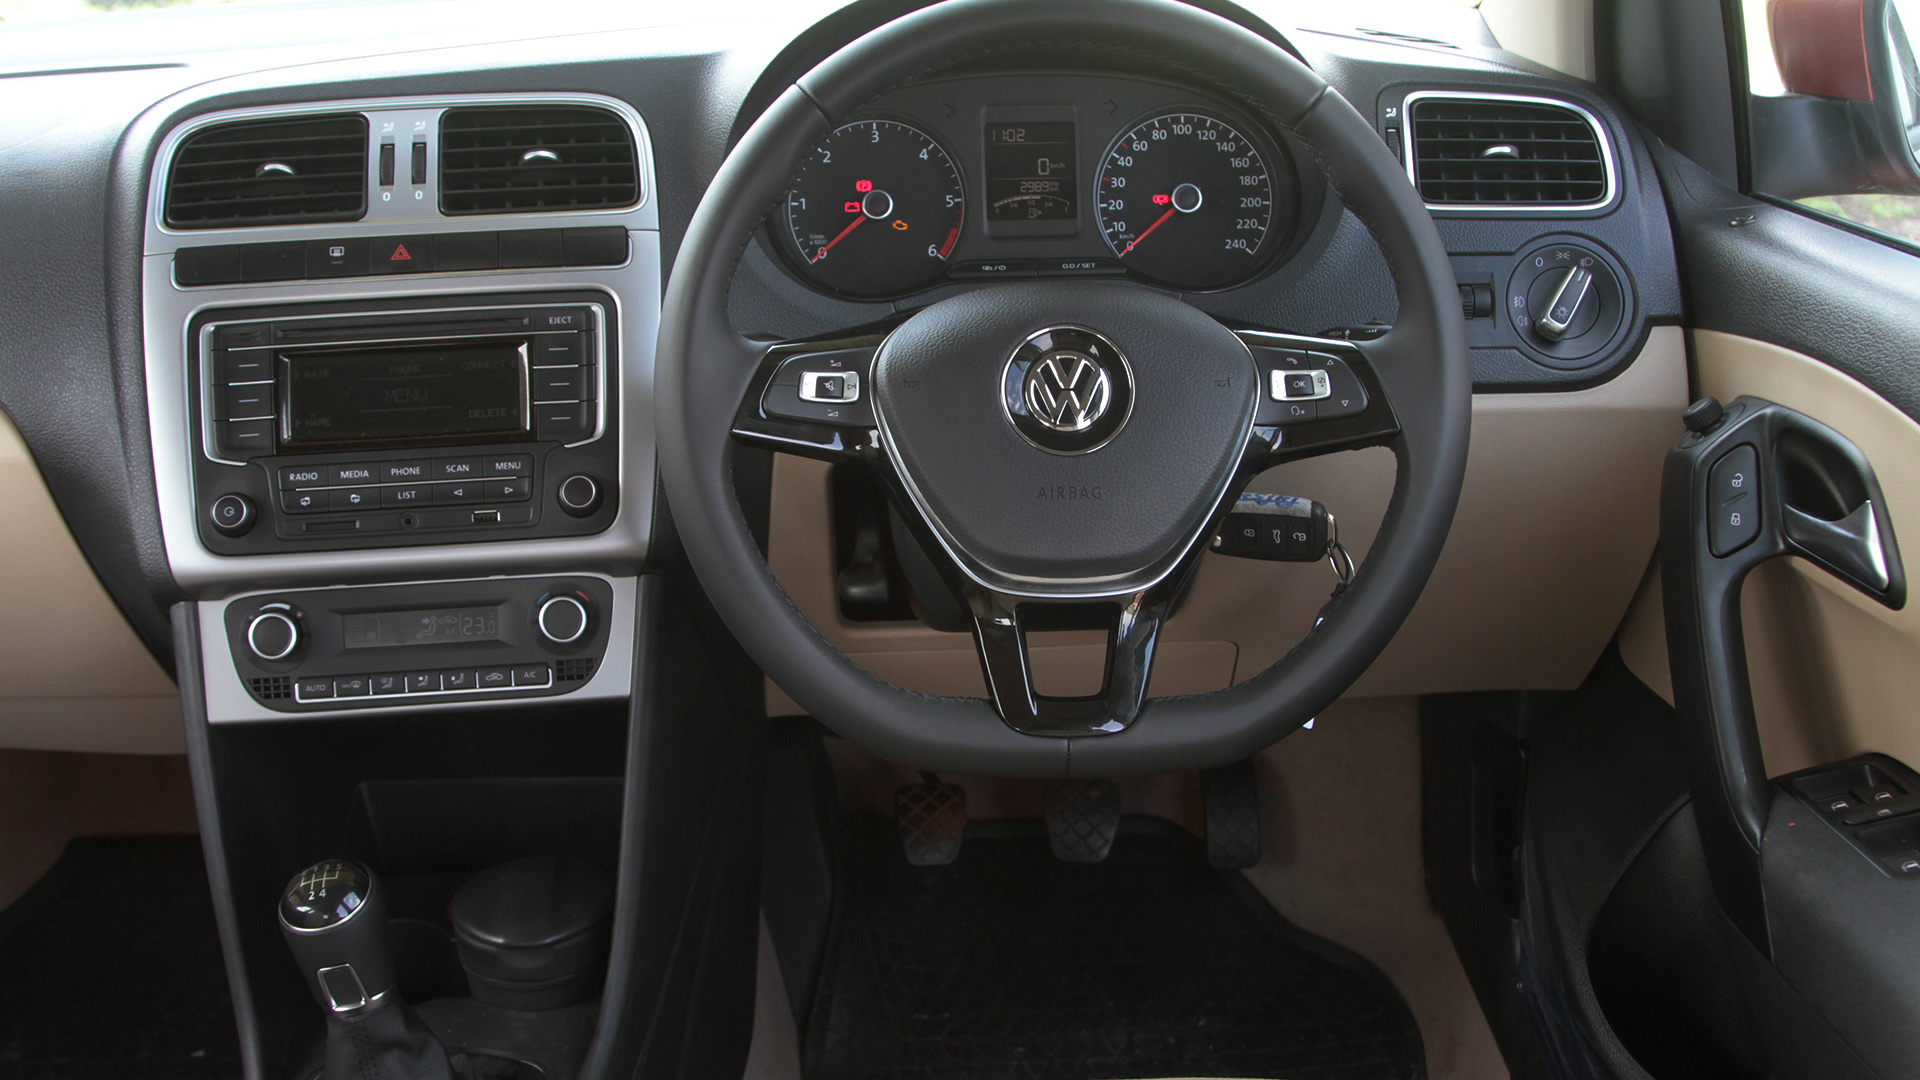 Volkswagen Polo 2019 Gt Tsi Price Mileage Reviews